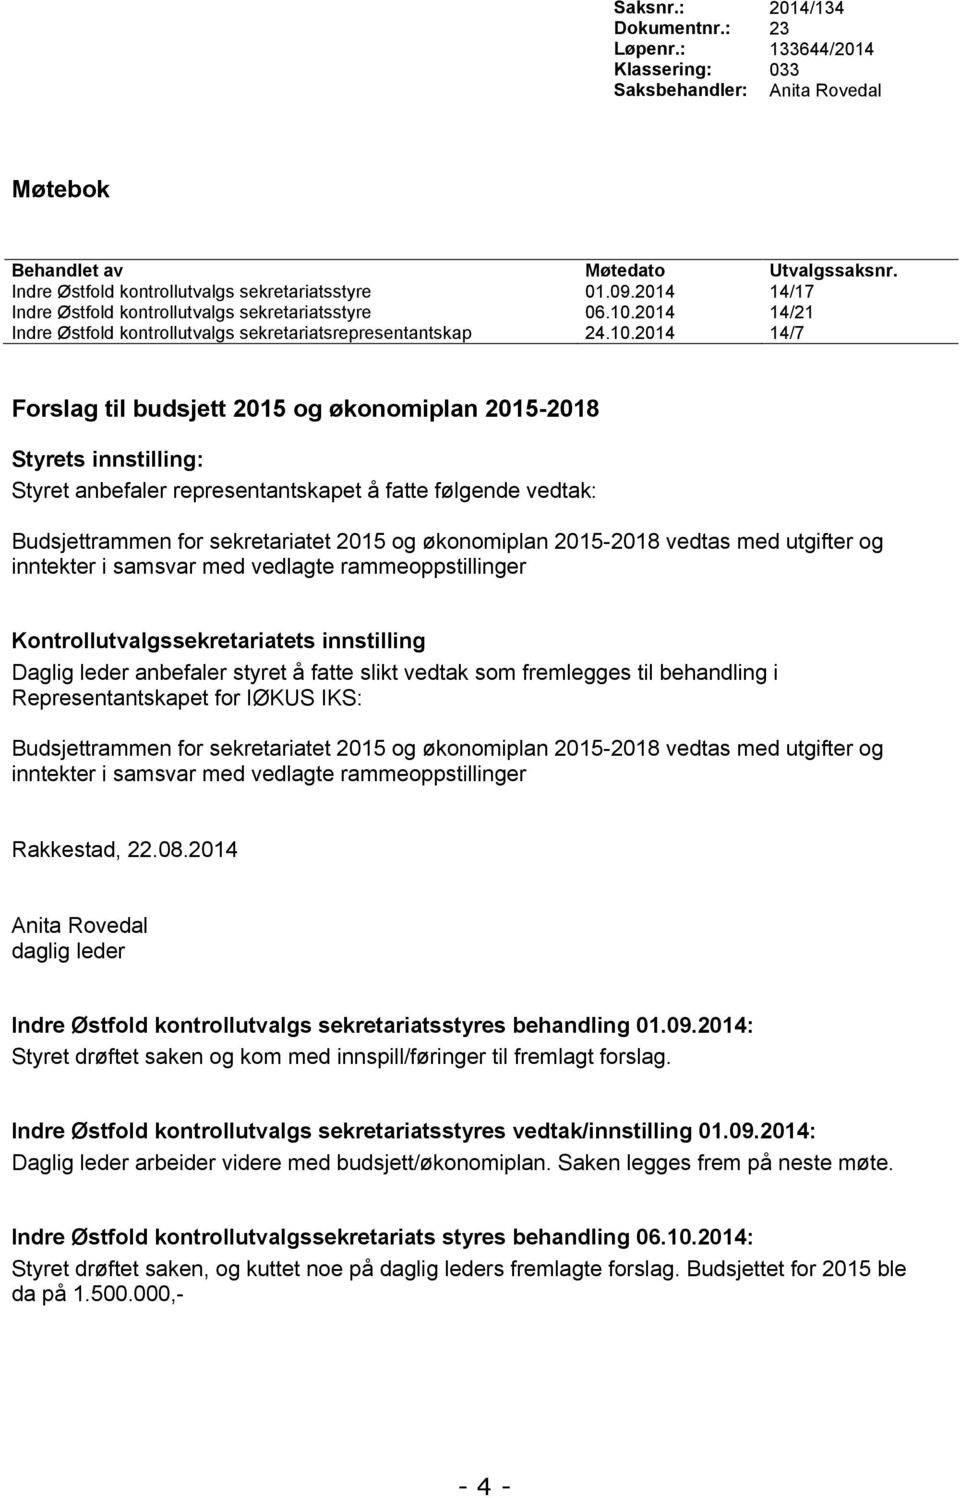 2014 14/21 Indre Østfold kontrollutvalgs sekretariatsrepresentantskap 24.10.